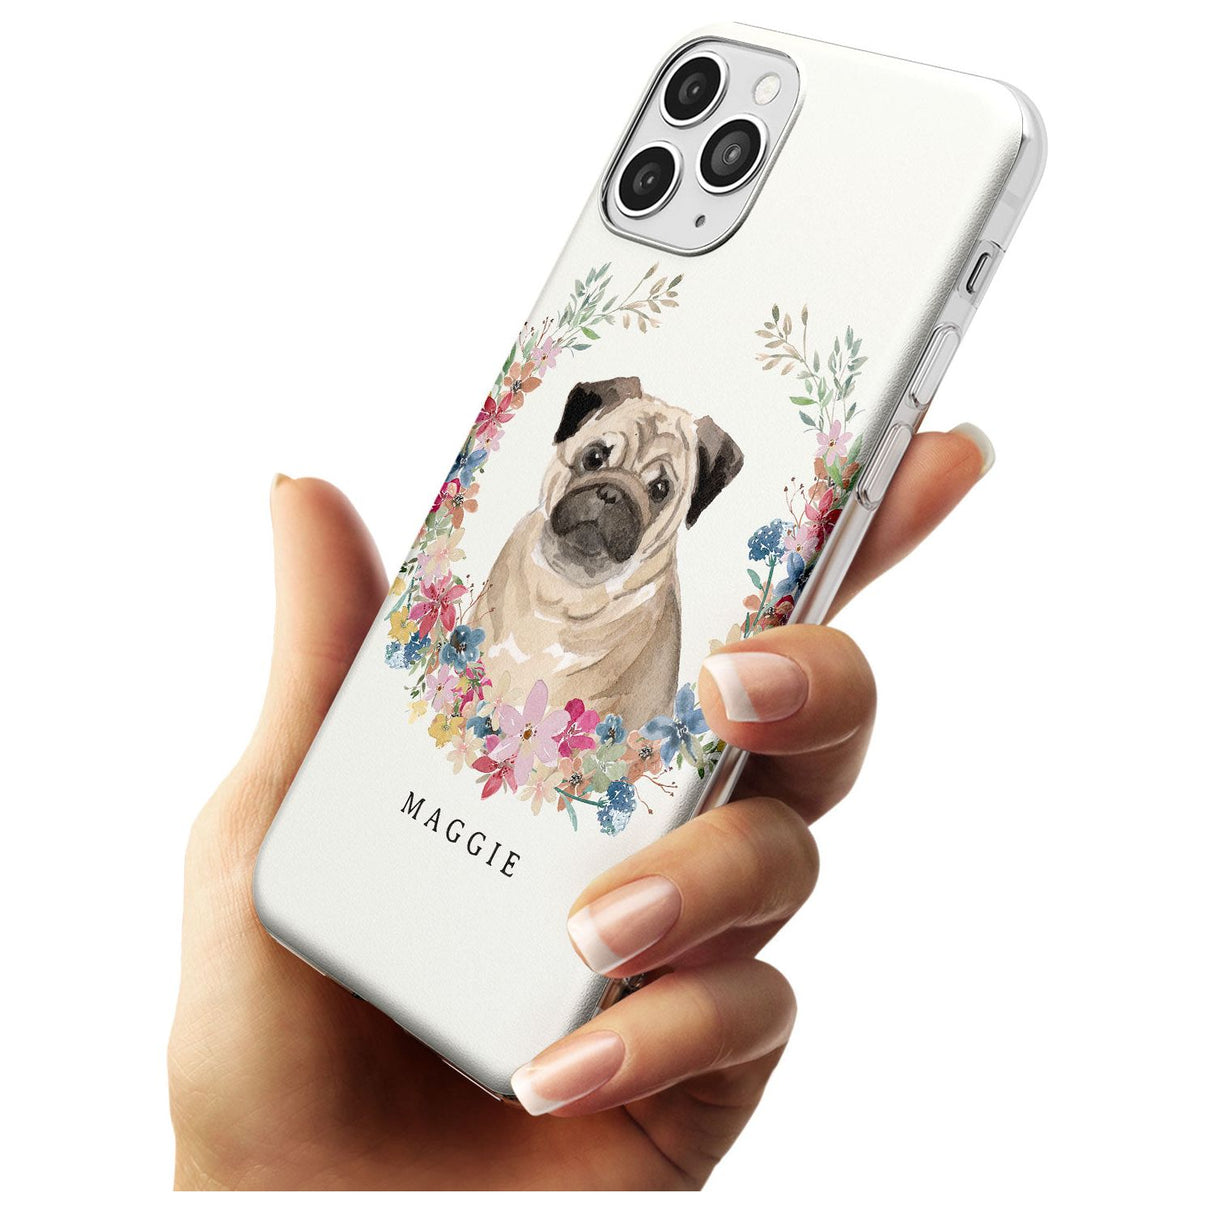 Pug - Watercolour Dog Portrait Slim TPU Phone Case for iPhone 11 Pro Max